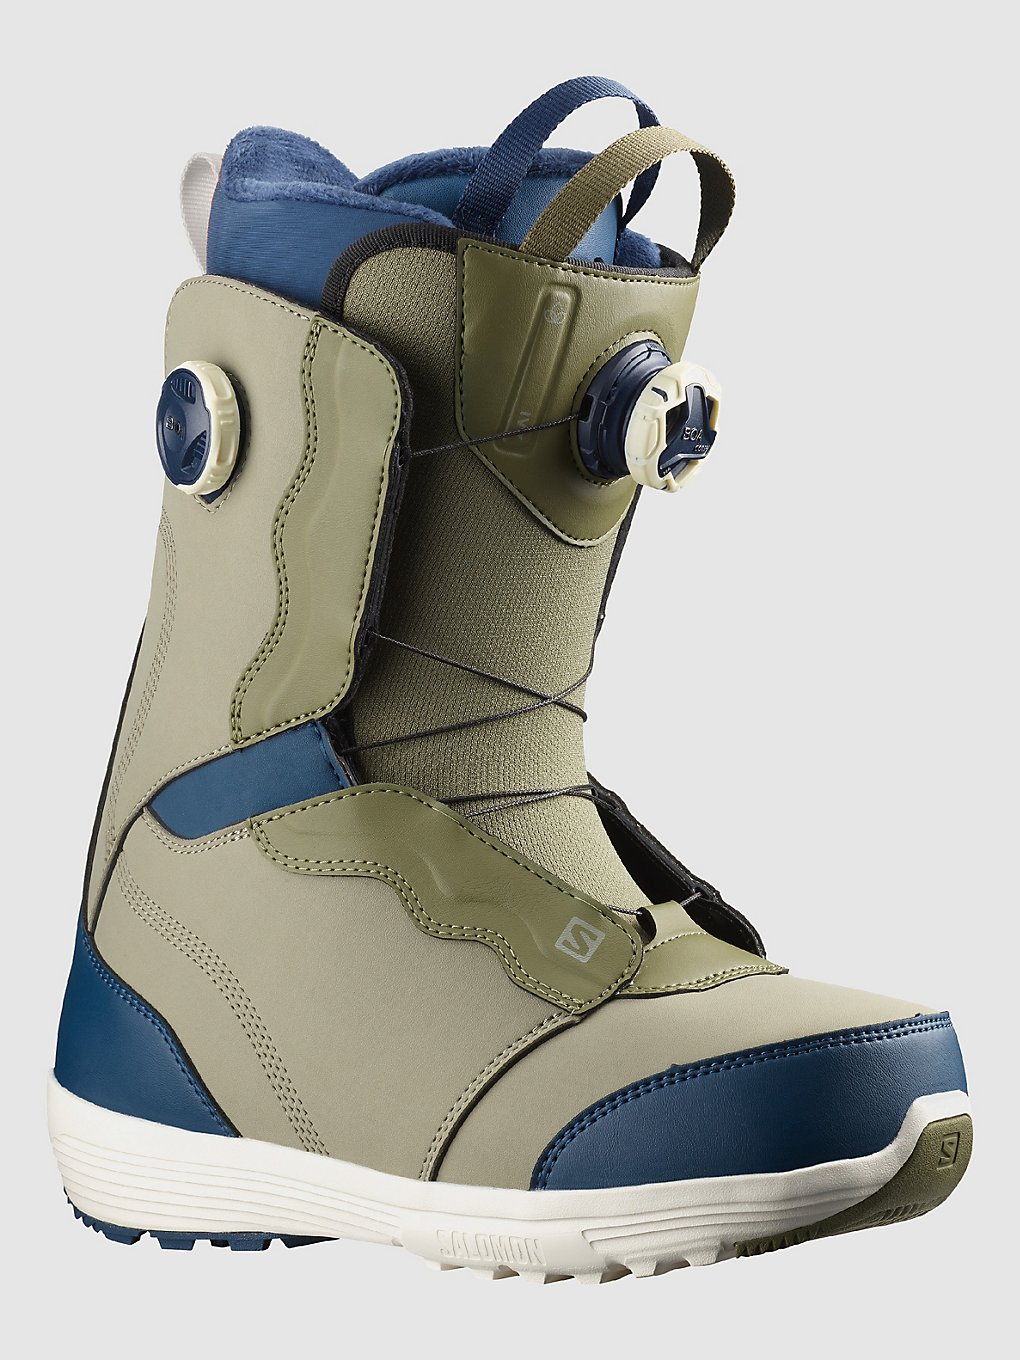 Salomon Ivy Boa SJ Boa 2022 Snowboard-Boots insgn kaufen